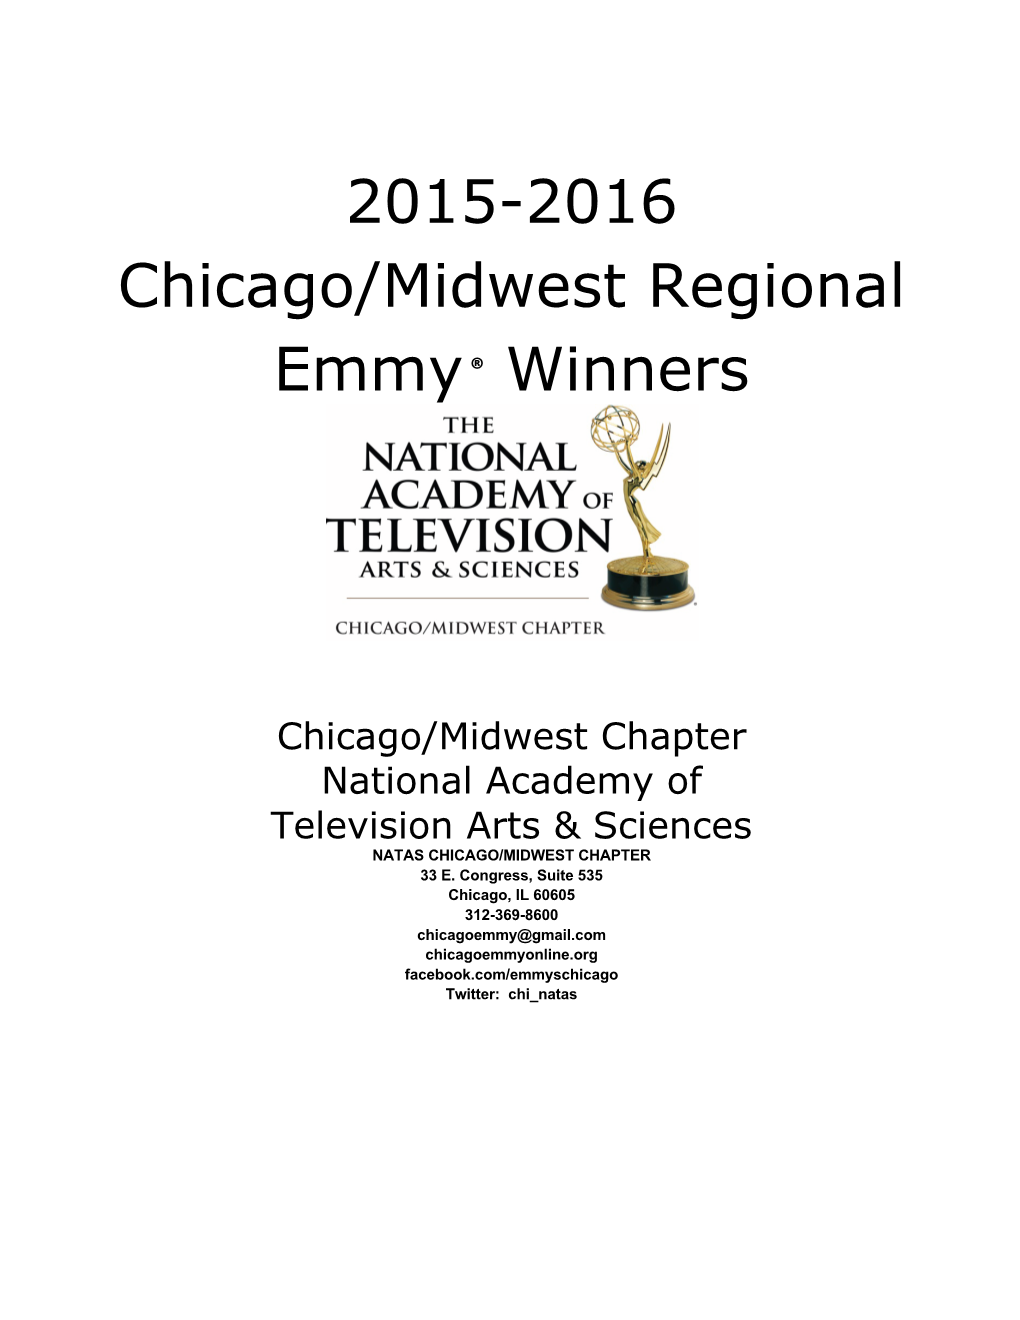 2015-2016 Chicago/Midwest Regional Emmy® Winners